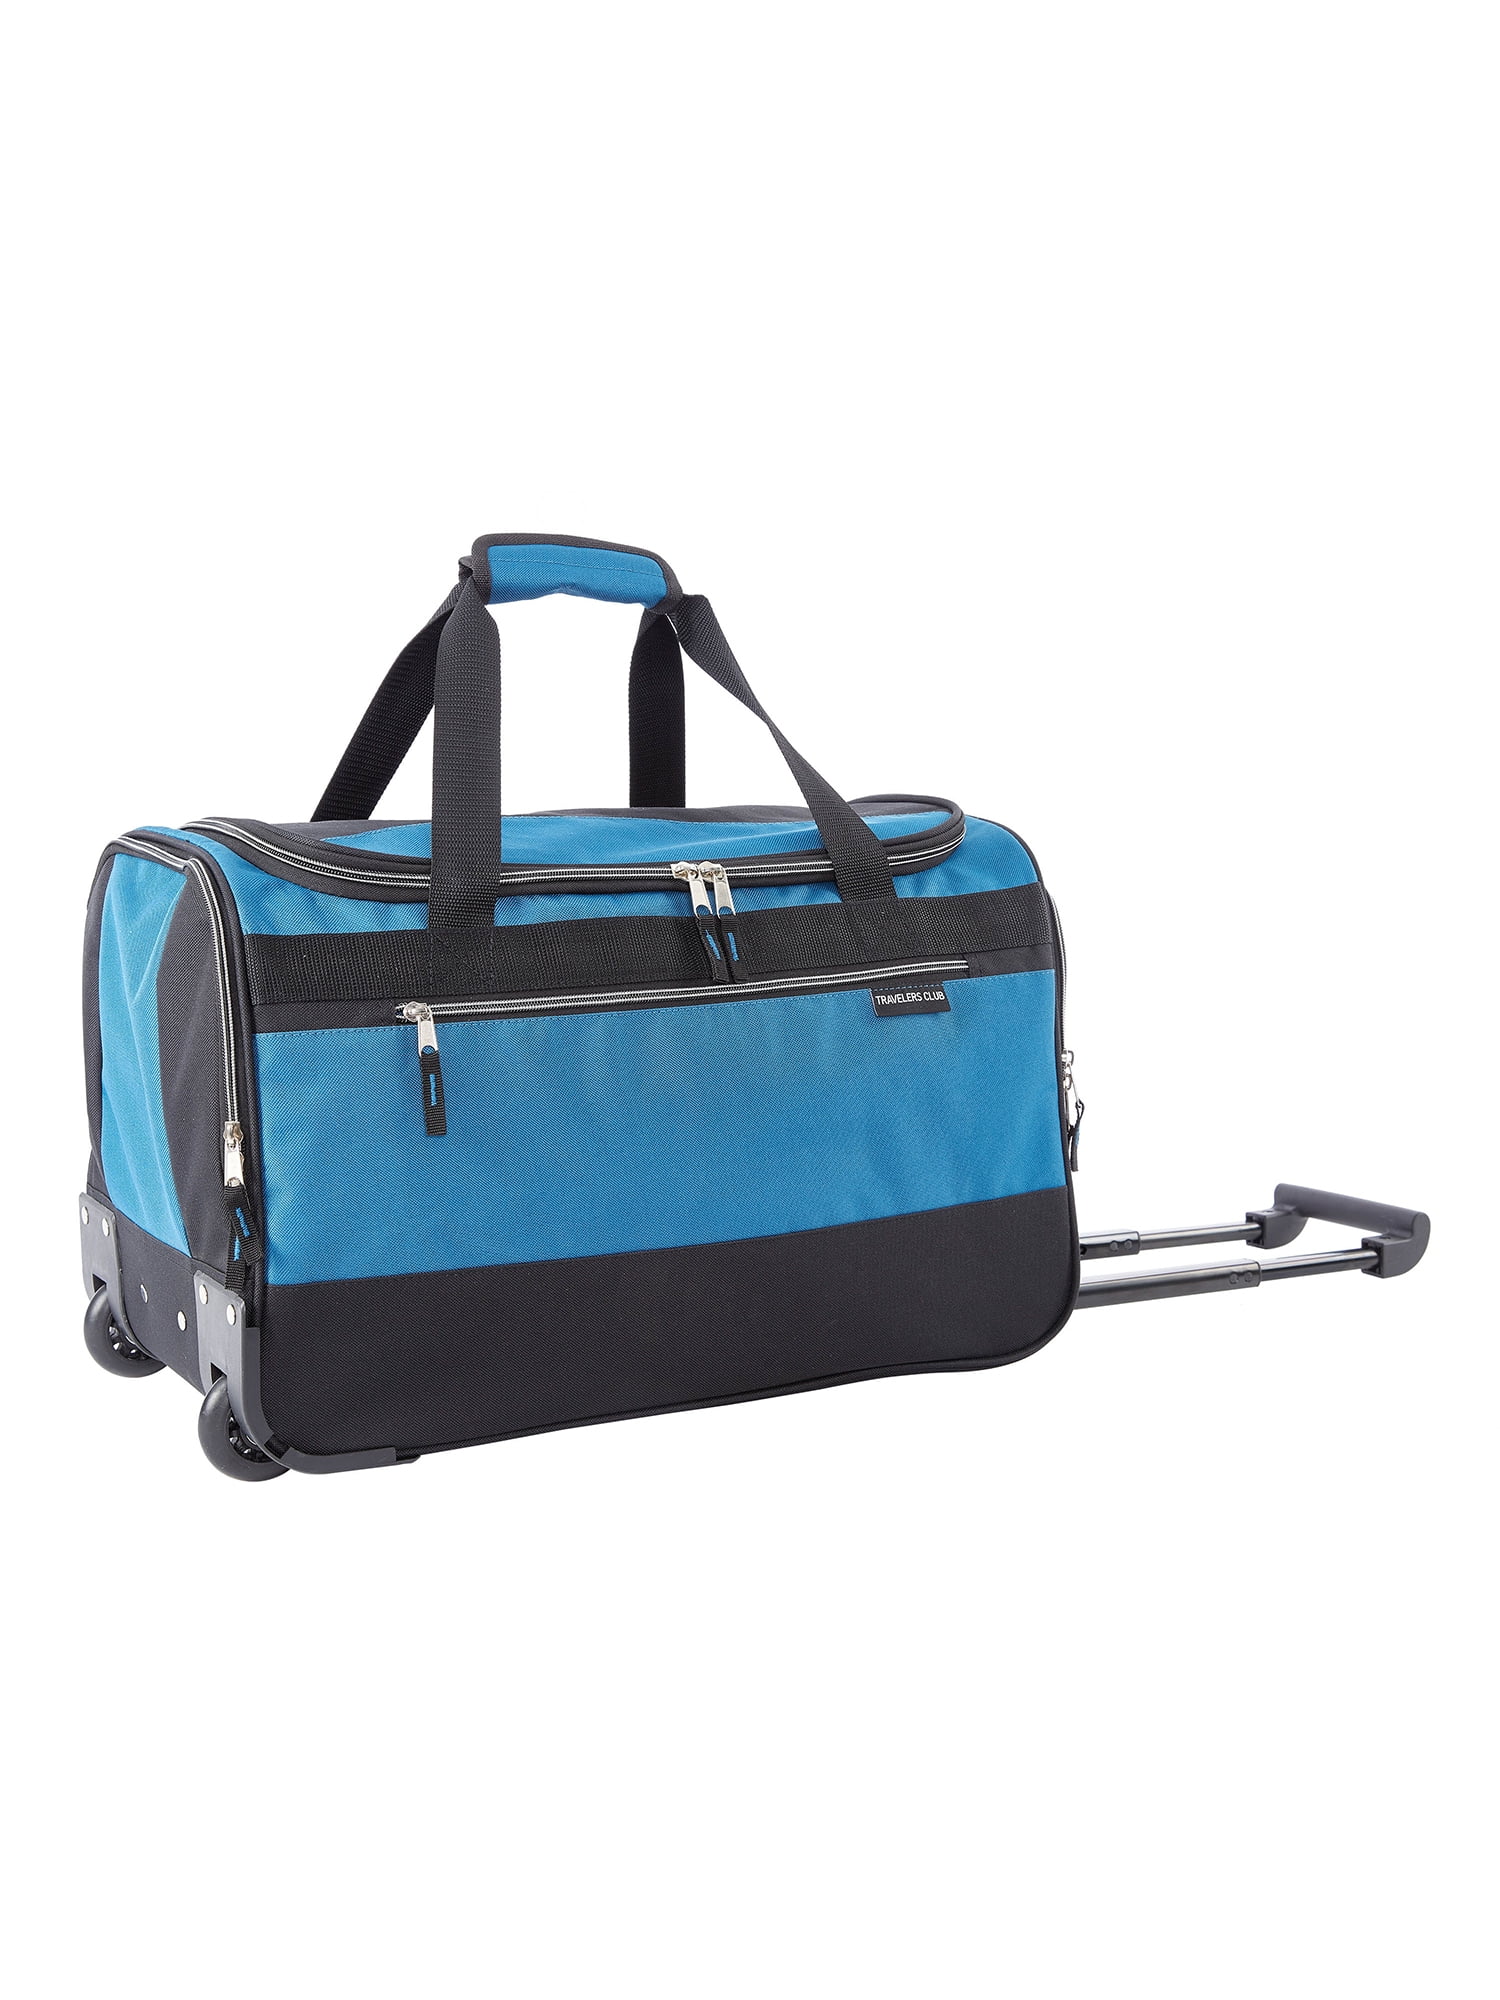 Softside Luggage Set 4 Pcs 19 25 Spinner Wheels 22'' Wheeled  Duffel Boarding Bag | eBay